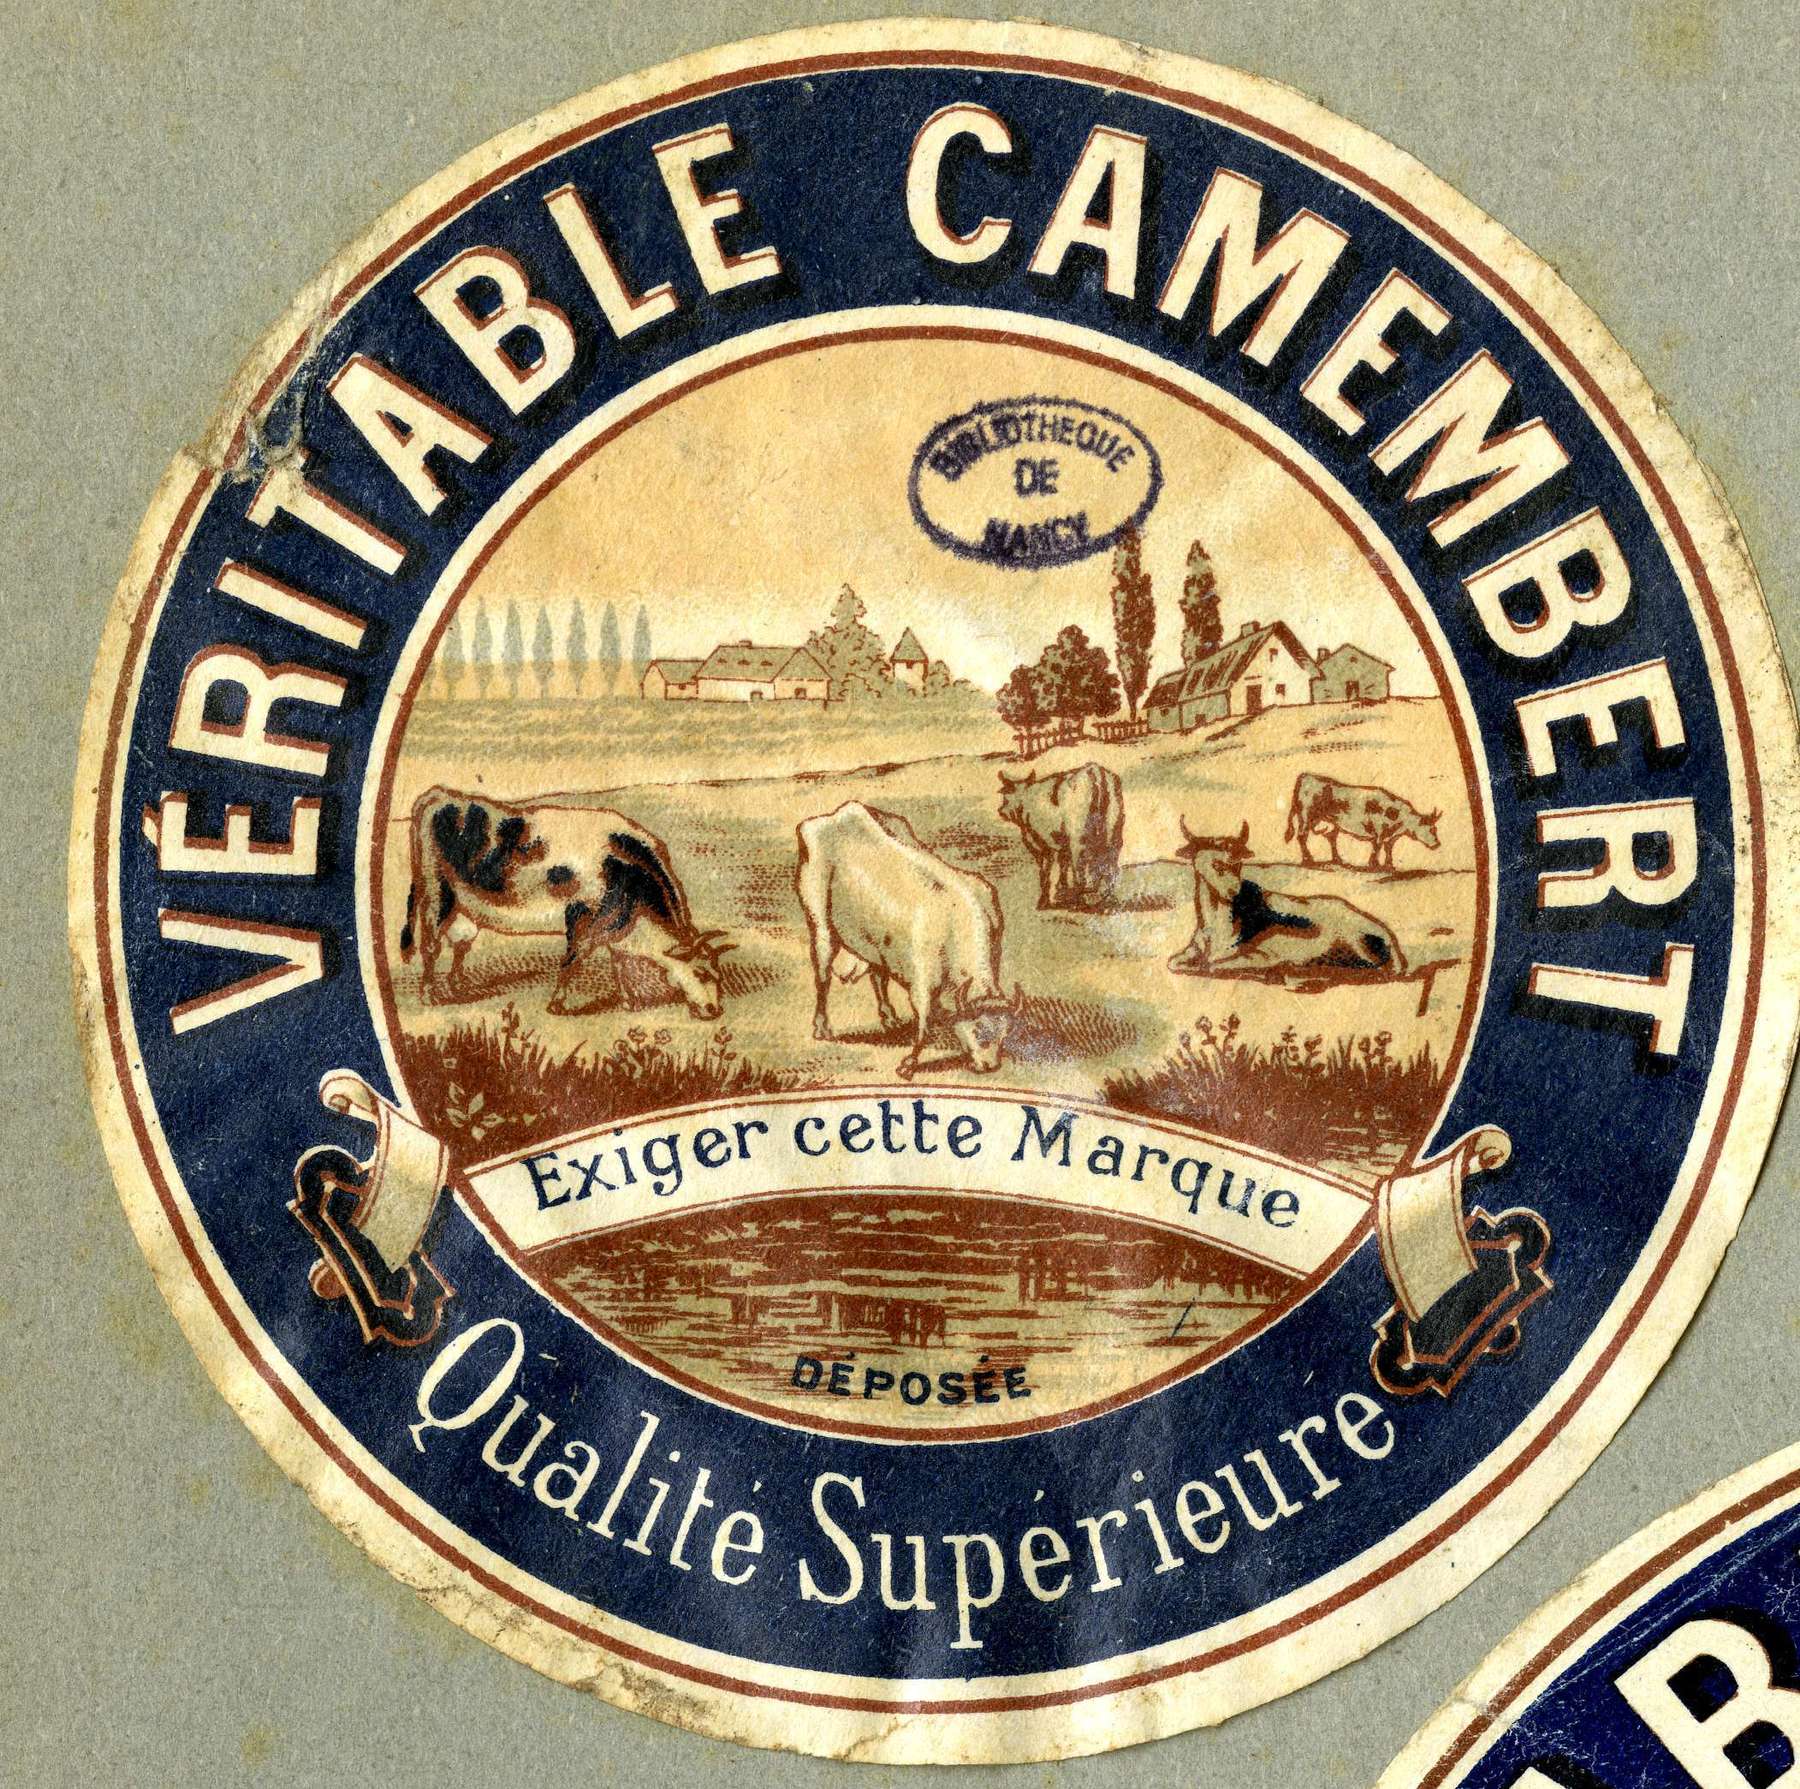 Contenu du Véritable camembert